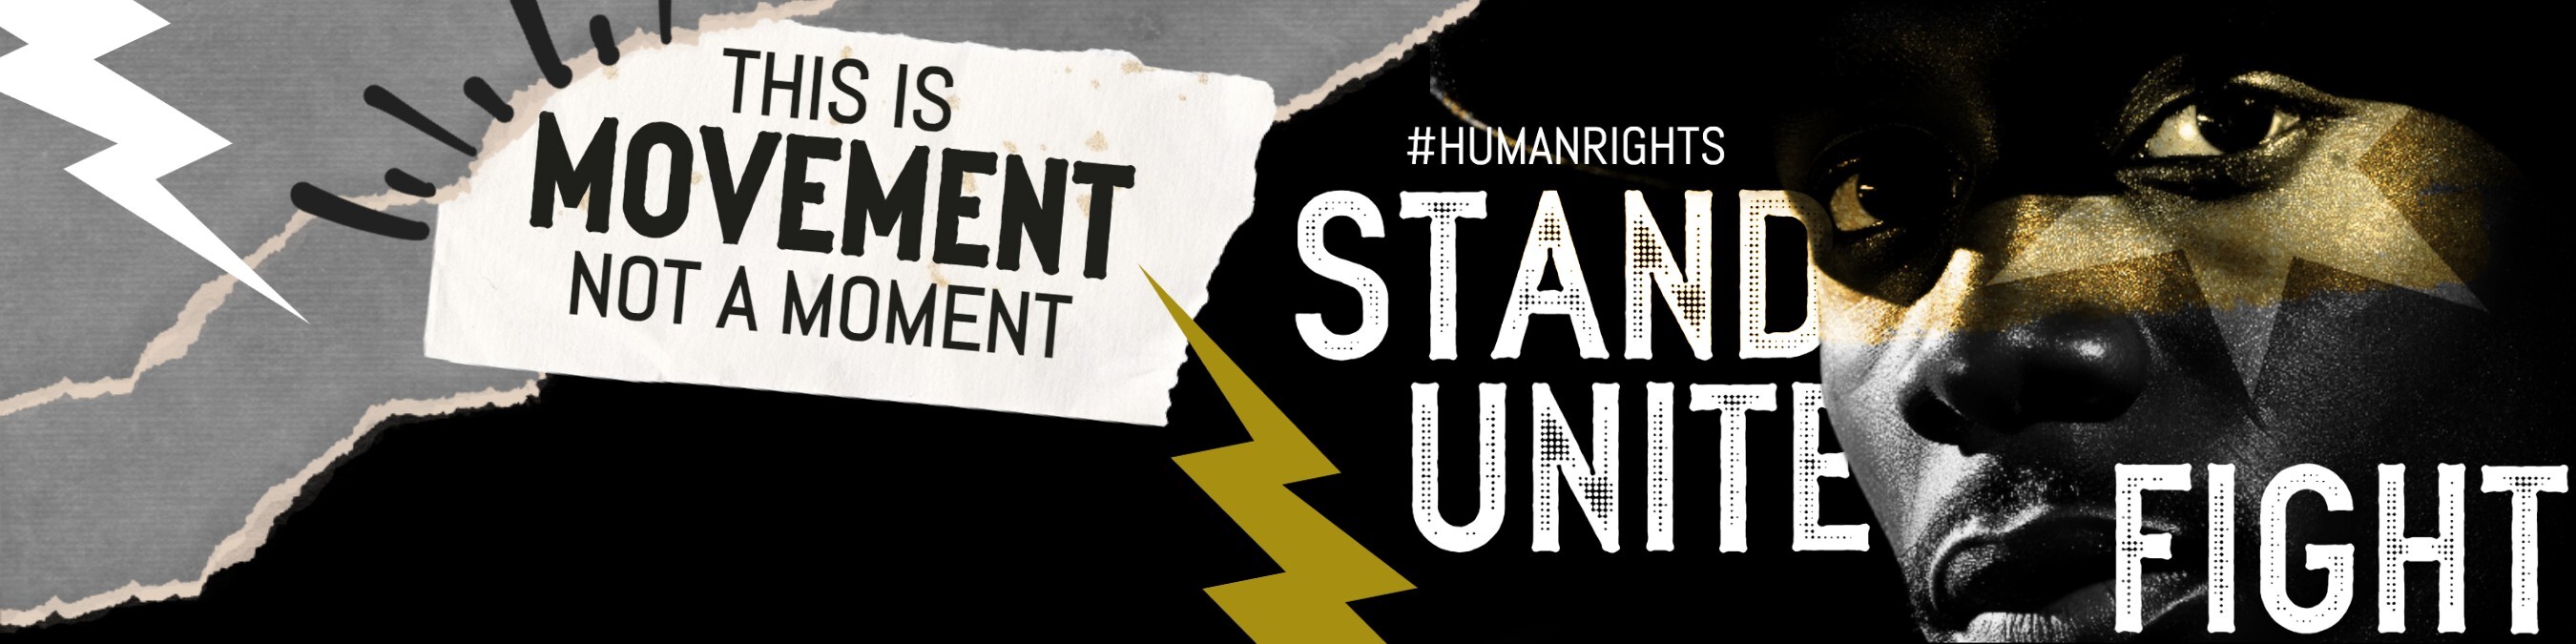 Human Rights Movement LinkedIn Banner Template